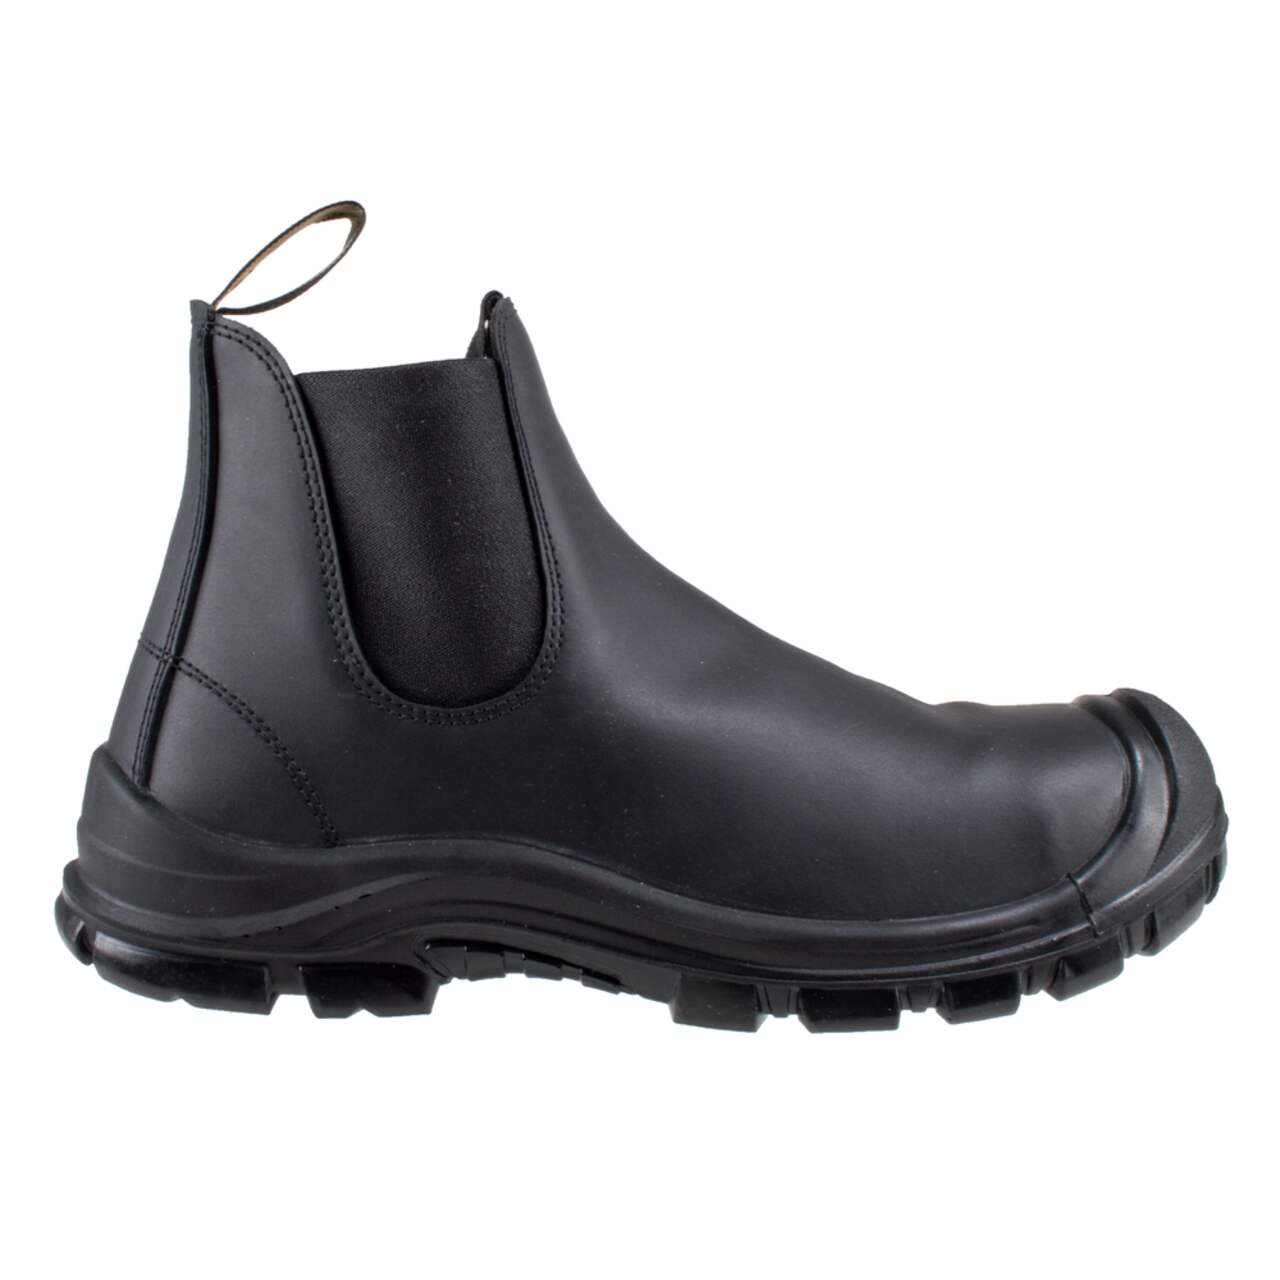 Altra Galvan Men's CSA Chelsea Steel Toe Leather Work Boots